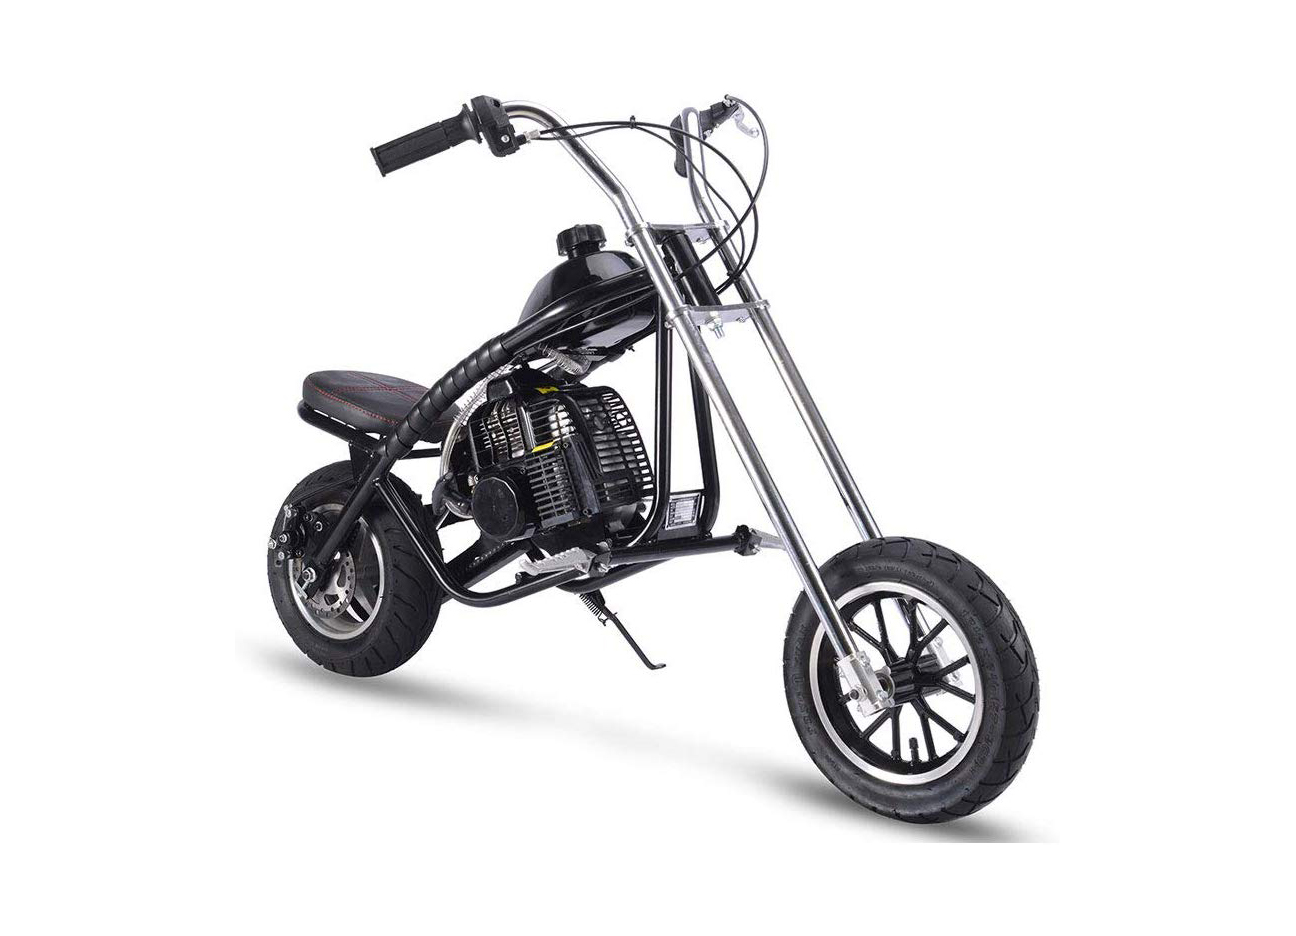 syx moto 50cc holeshot mini dirt bike